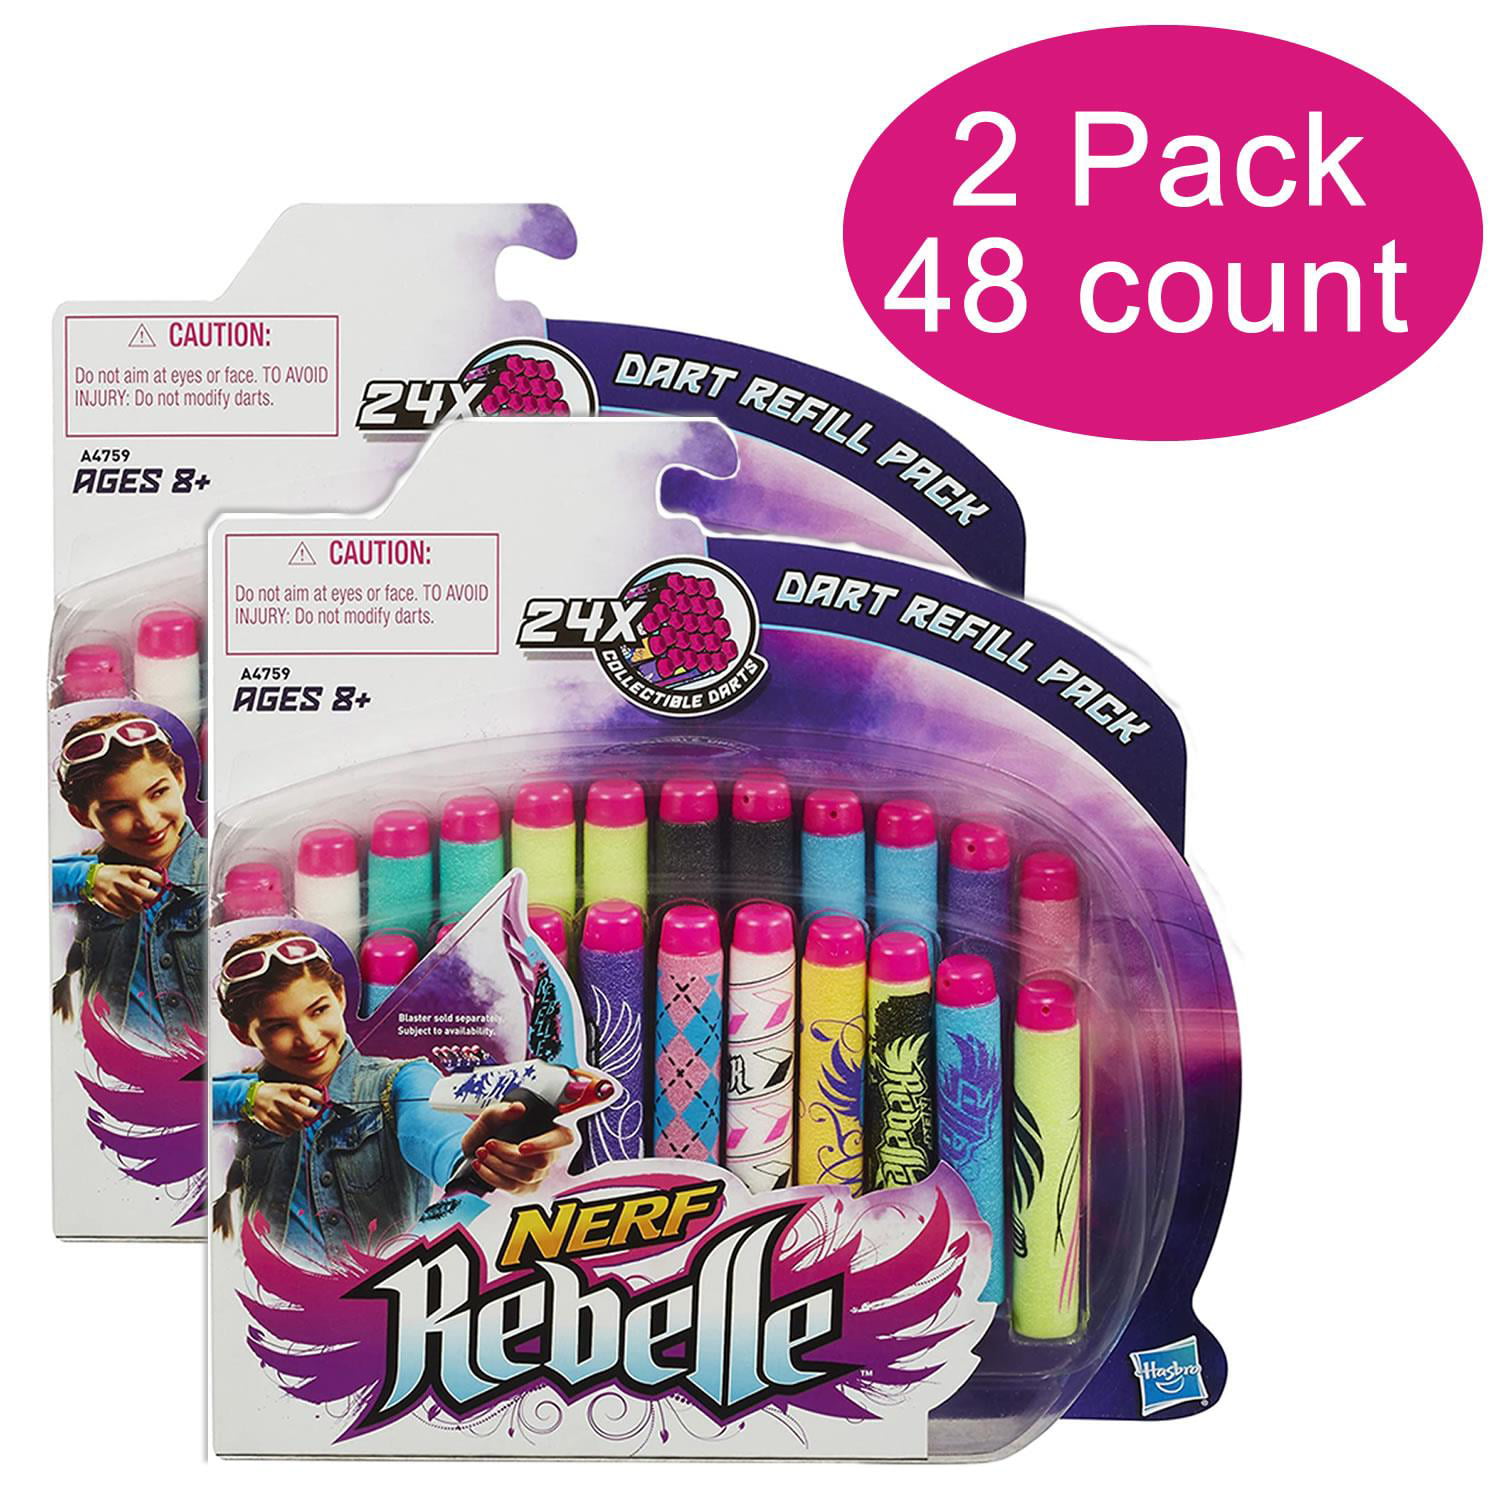 NERF Rebelle Dart Refill 24ct Soft Bullet Secrets Spies Battle War Game Girl for sale online 